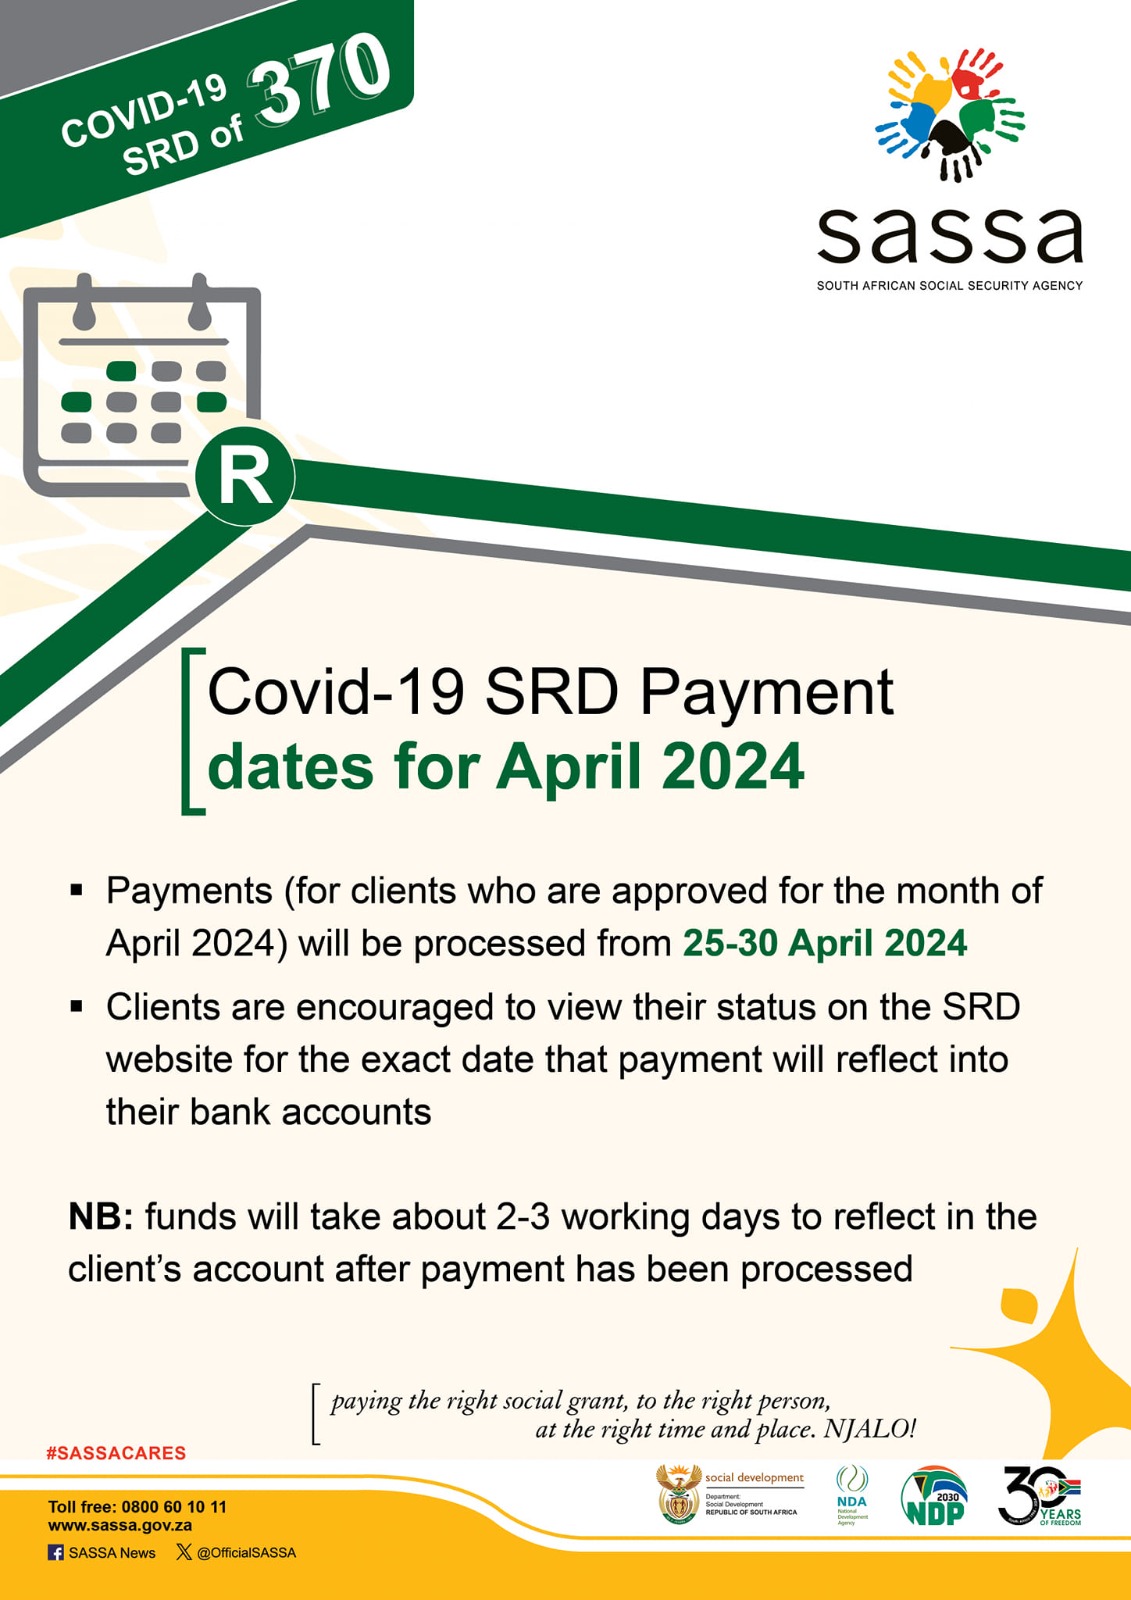 SASSA Payment Dates For April